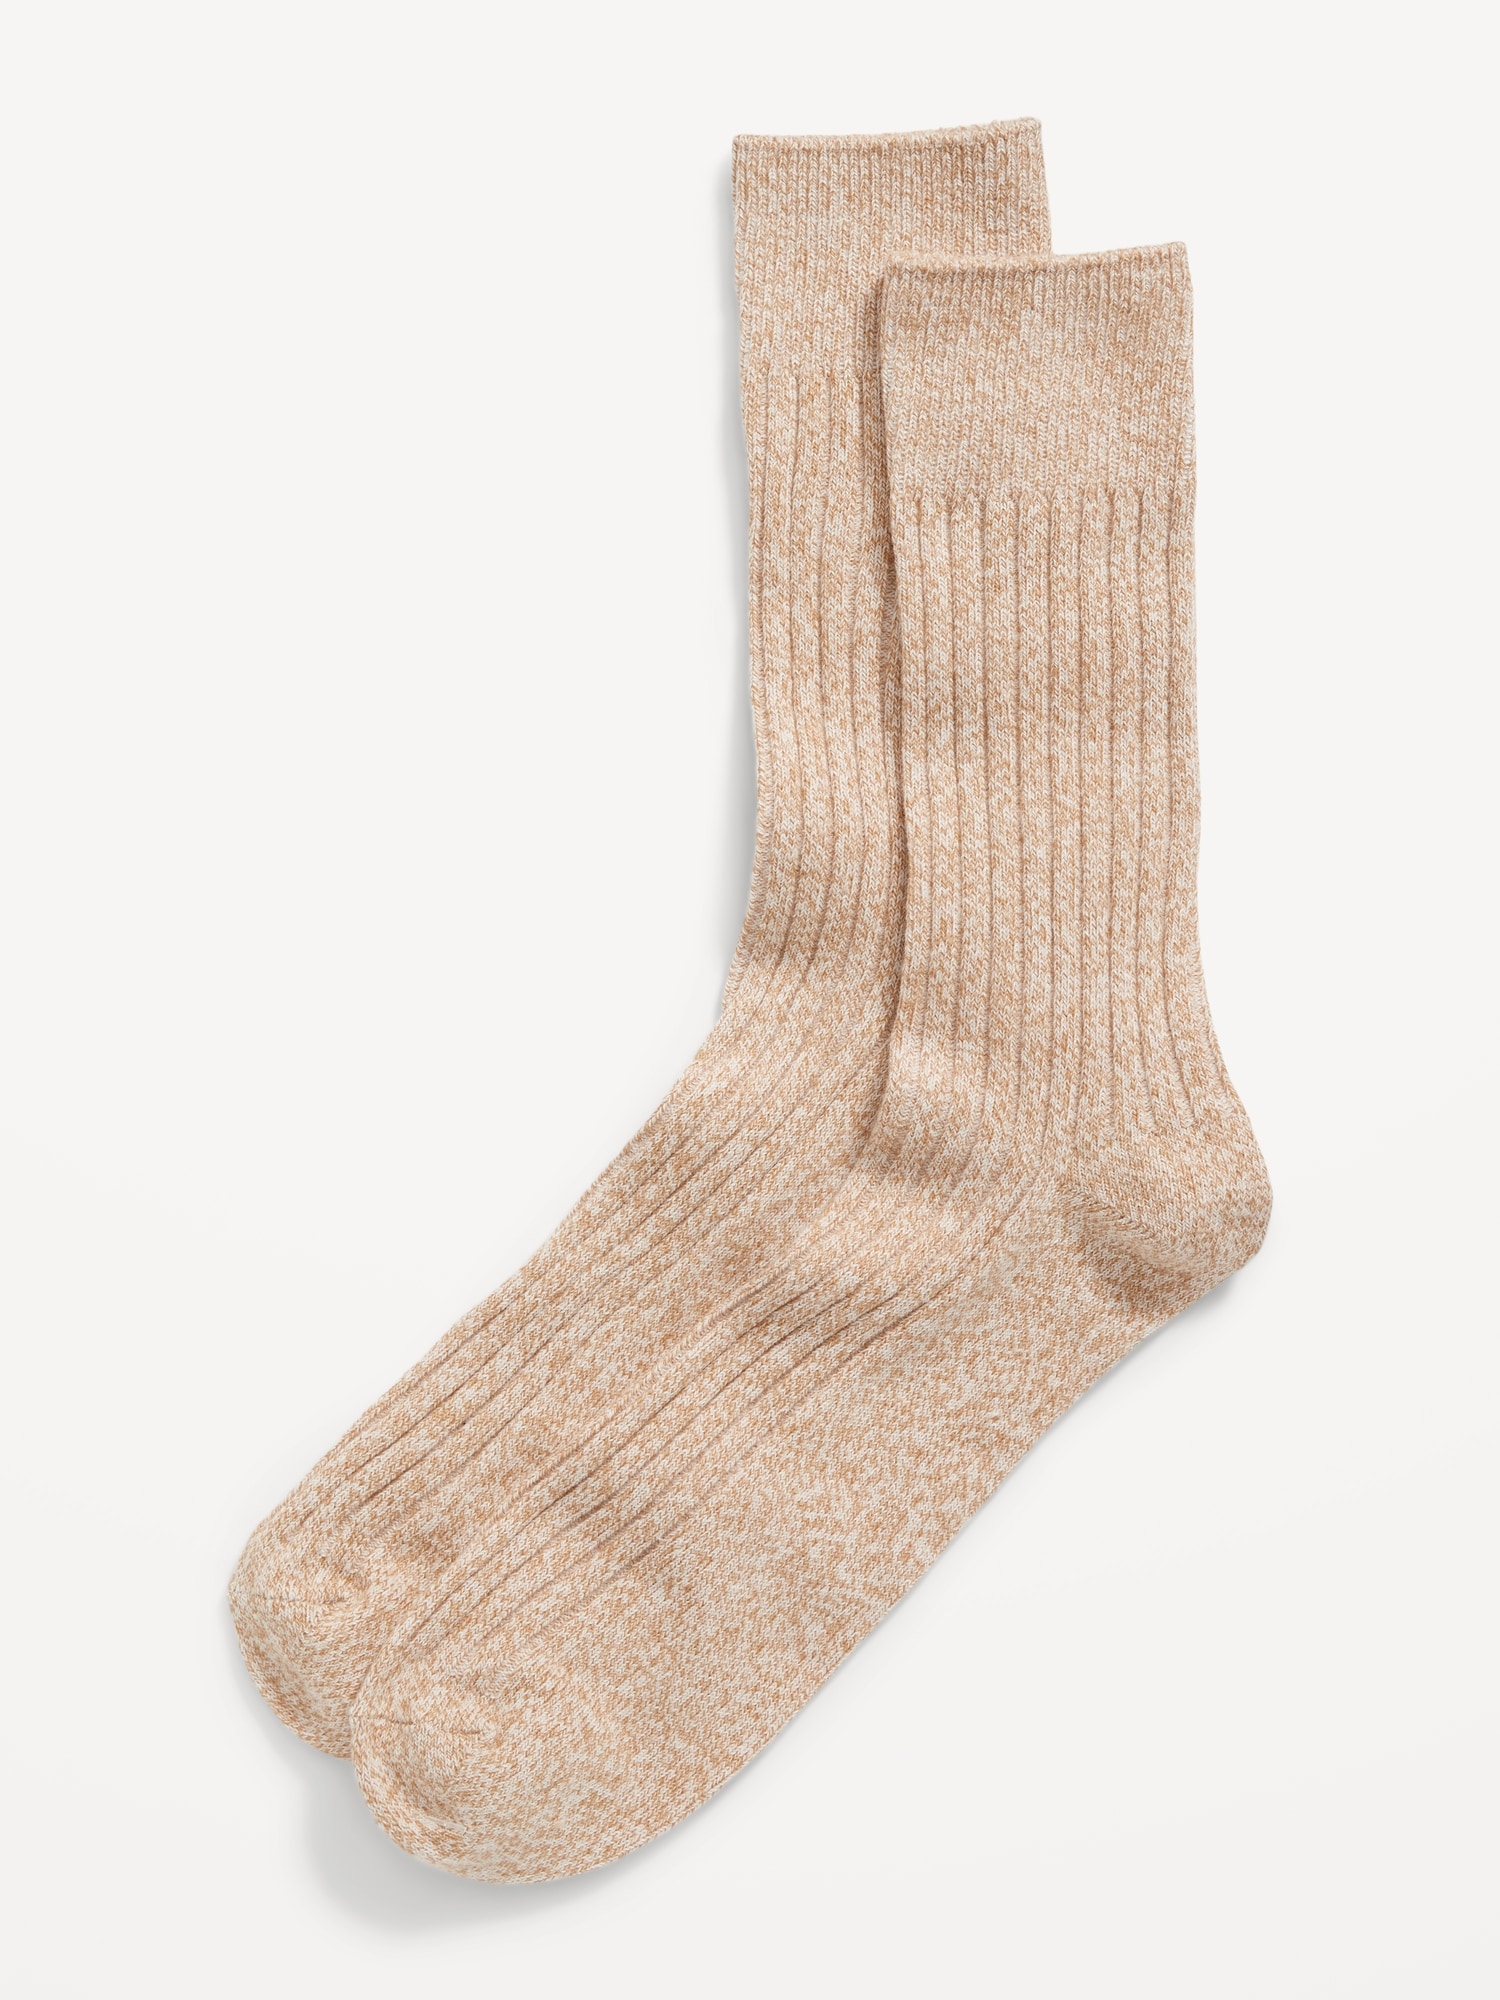 Rib-Knit Crew Socks for Men | Old Navy